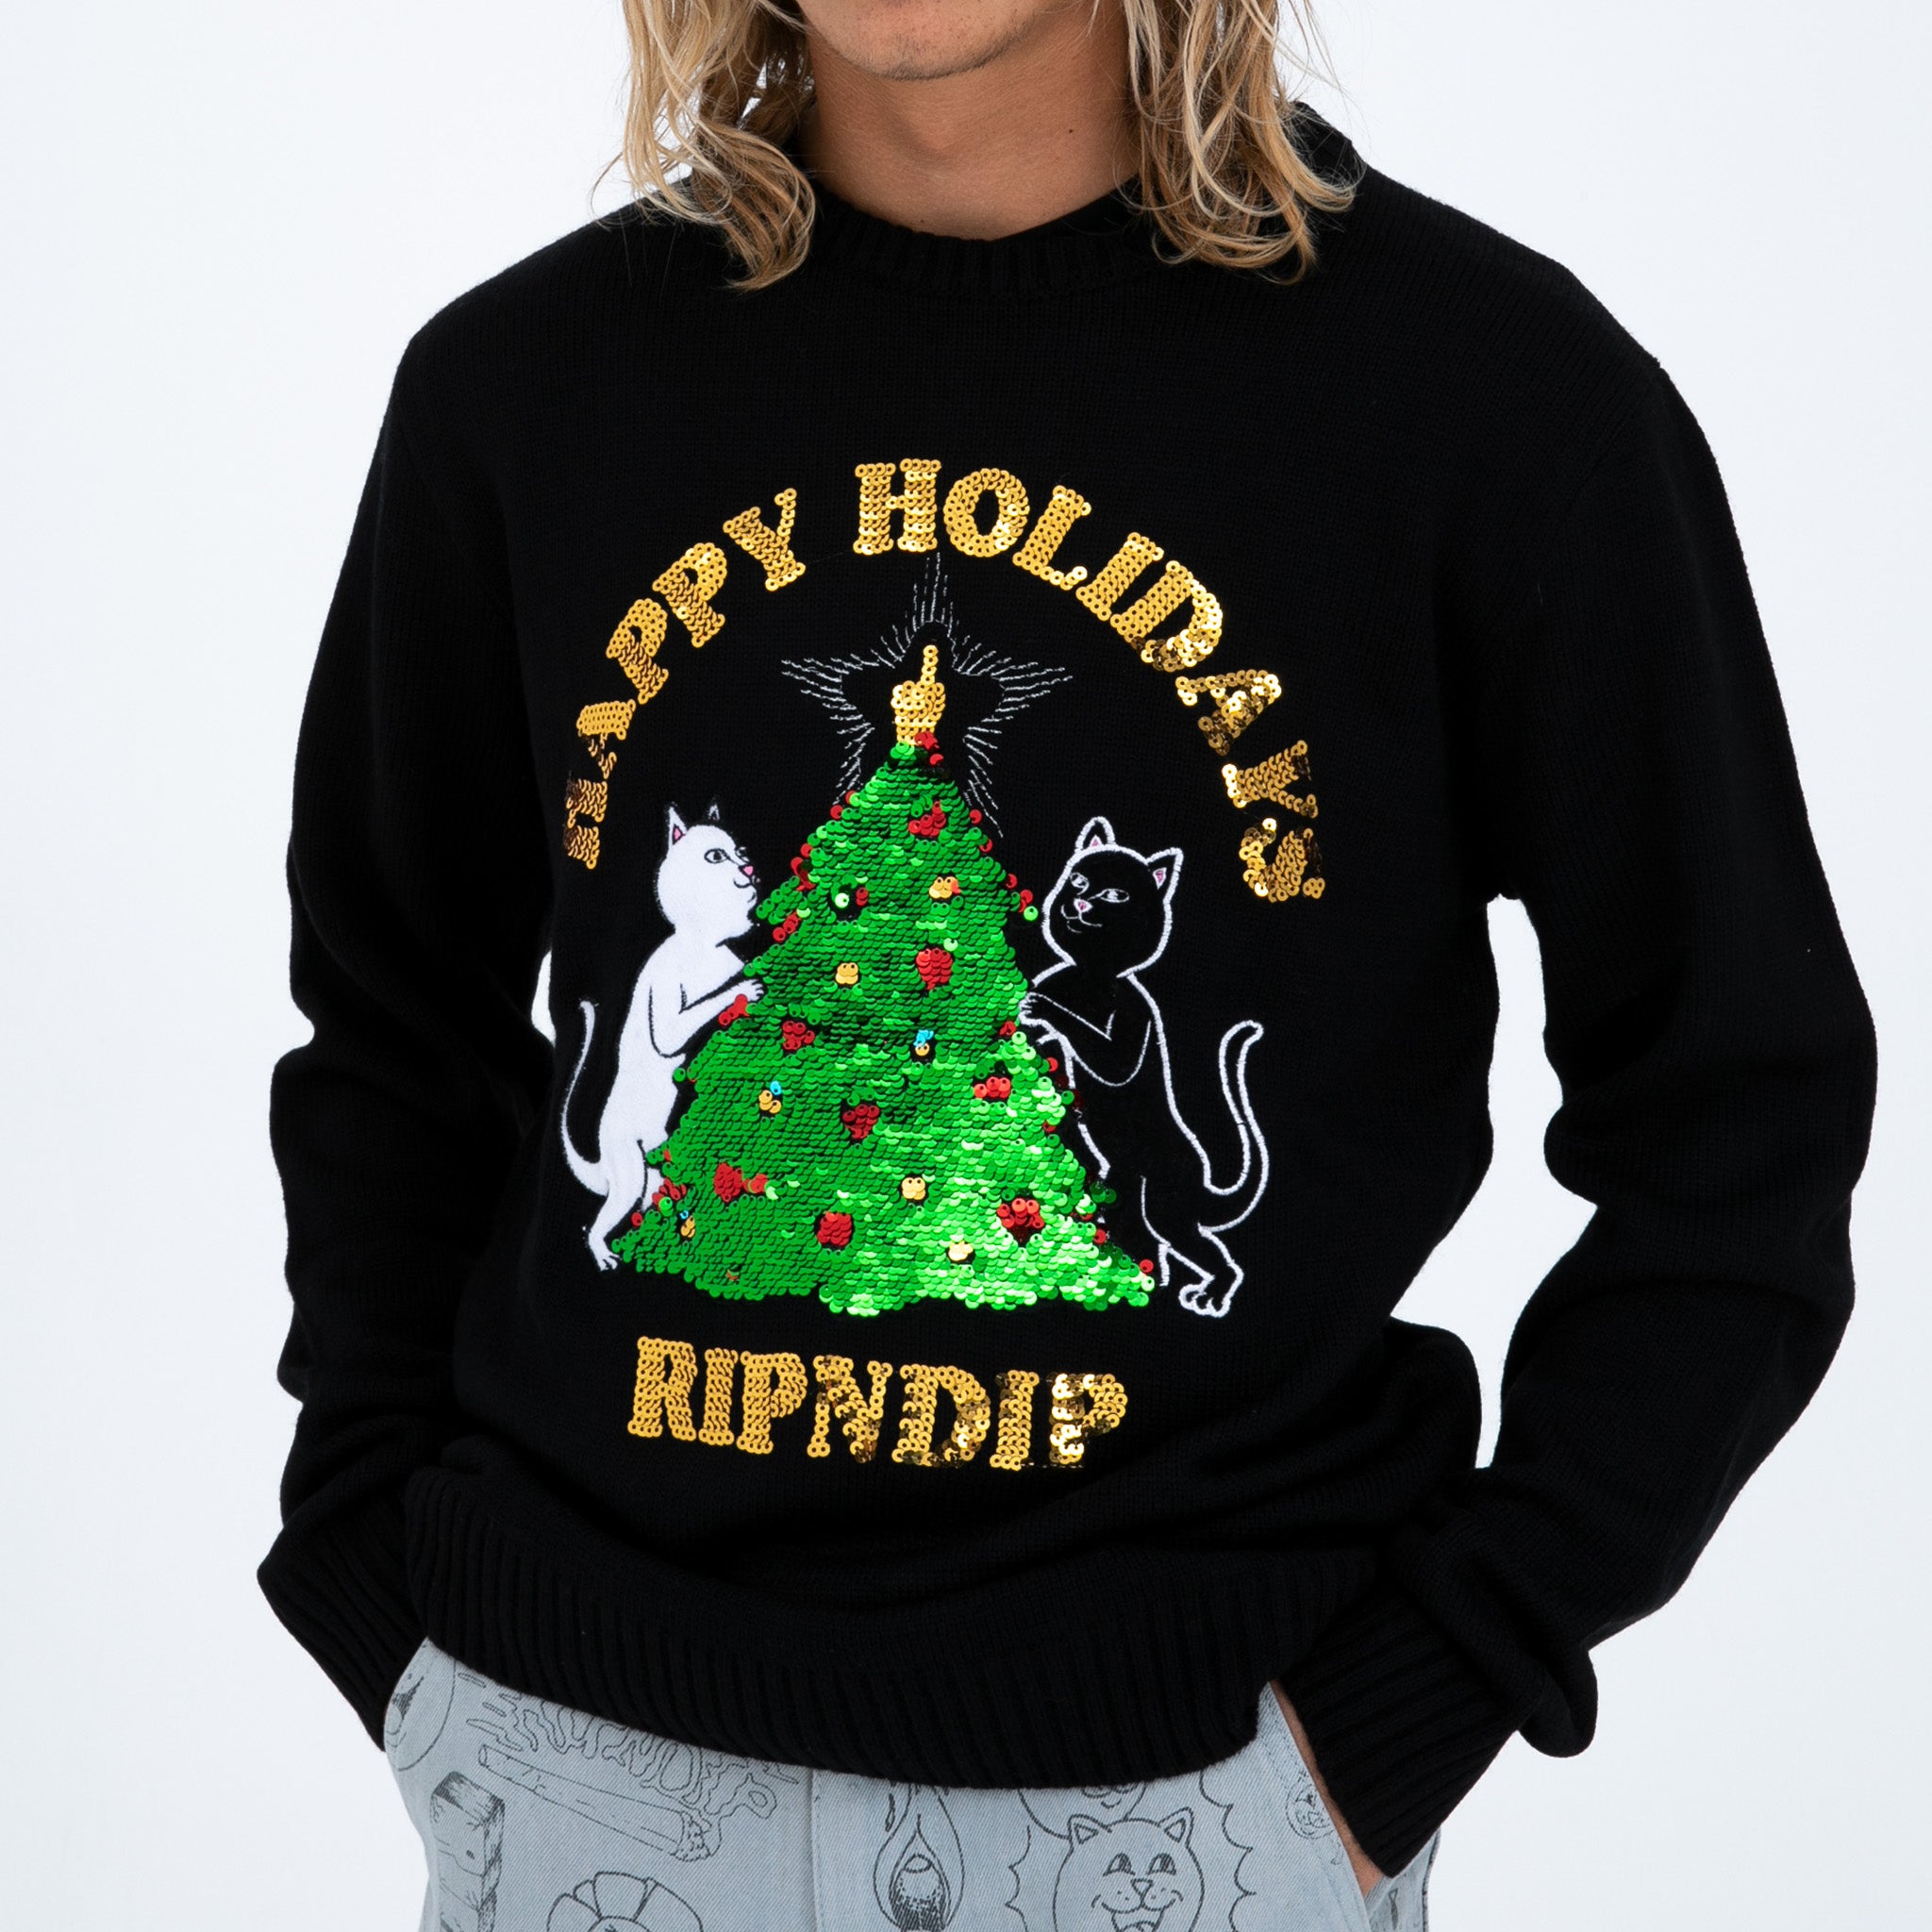 RIPNDIP Litmas Tree Knitted Sweater (Black)